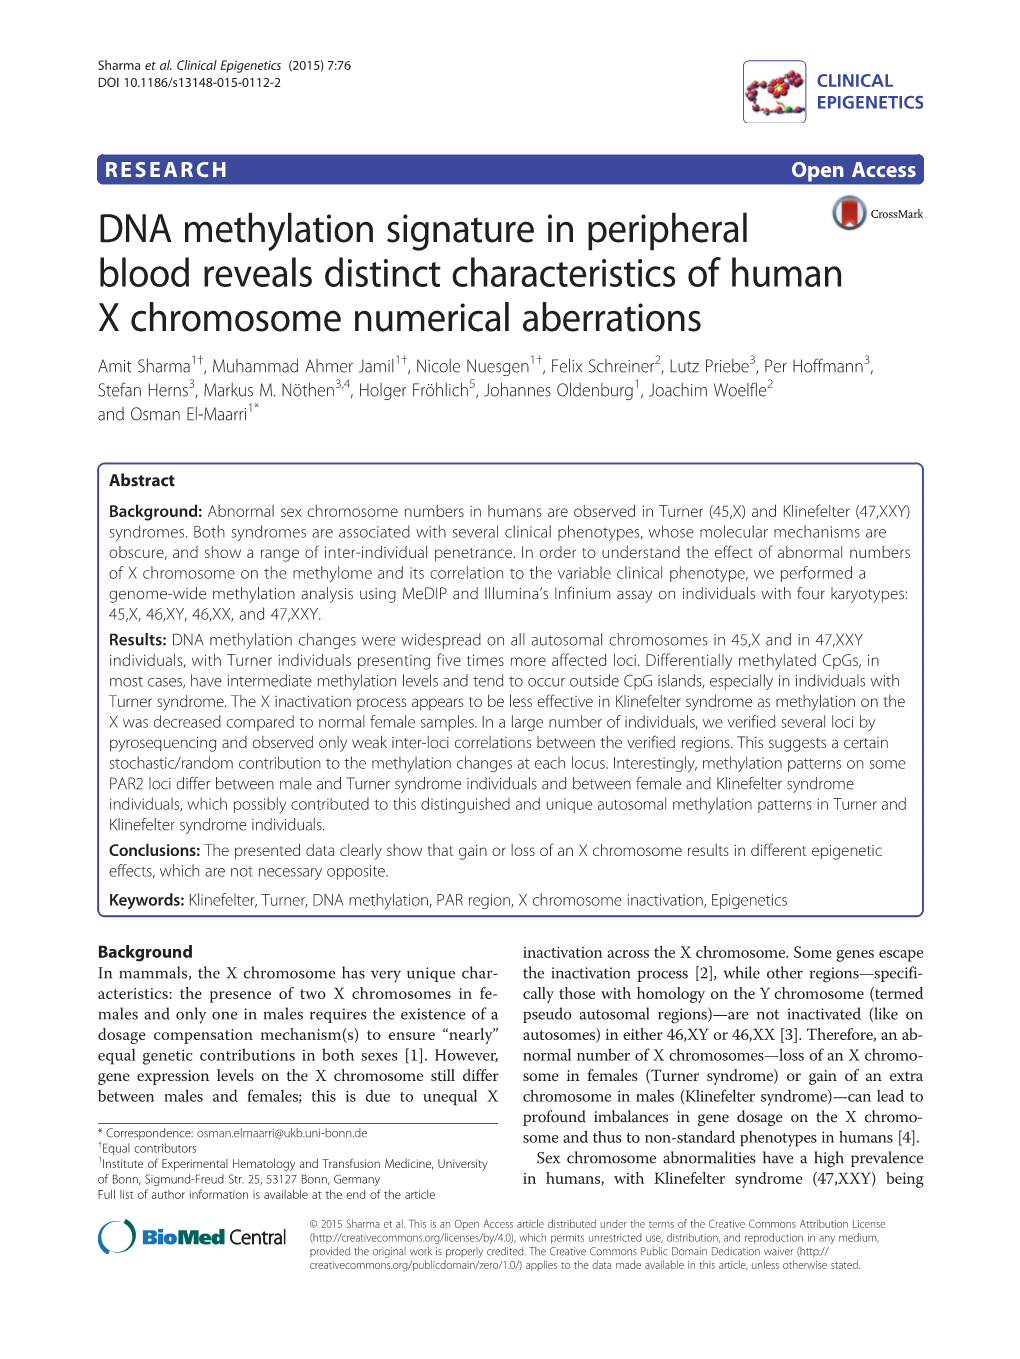 DNA Methylation Signature in Peripheral Blood Reveals Distinct